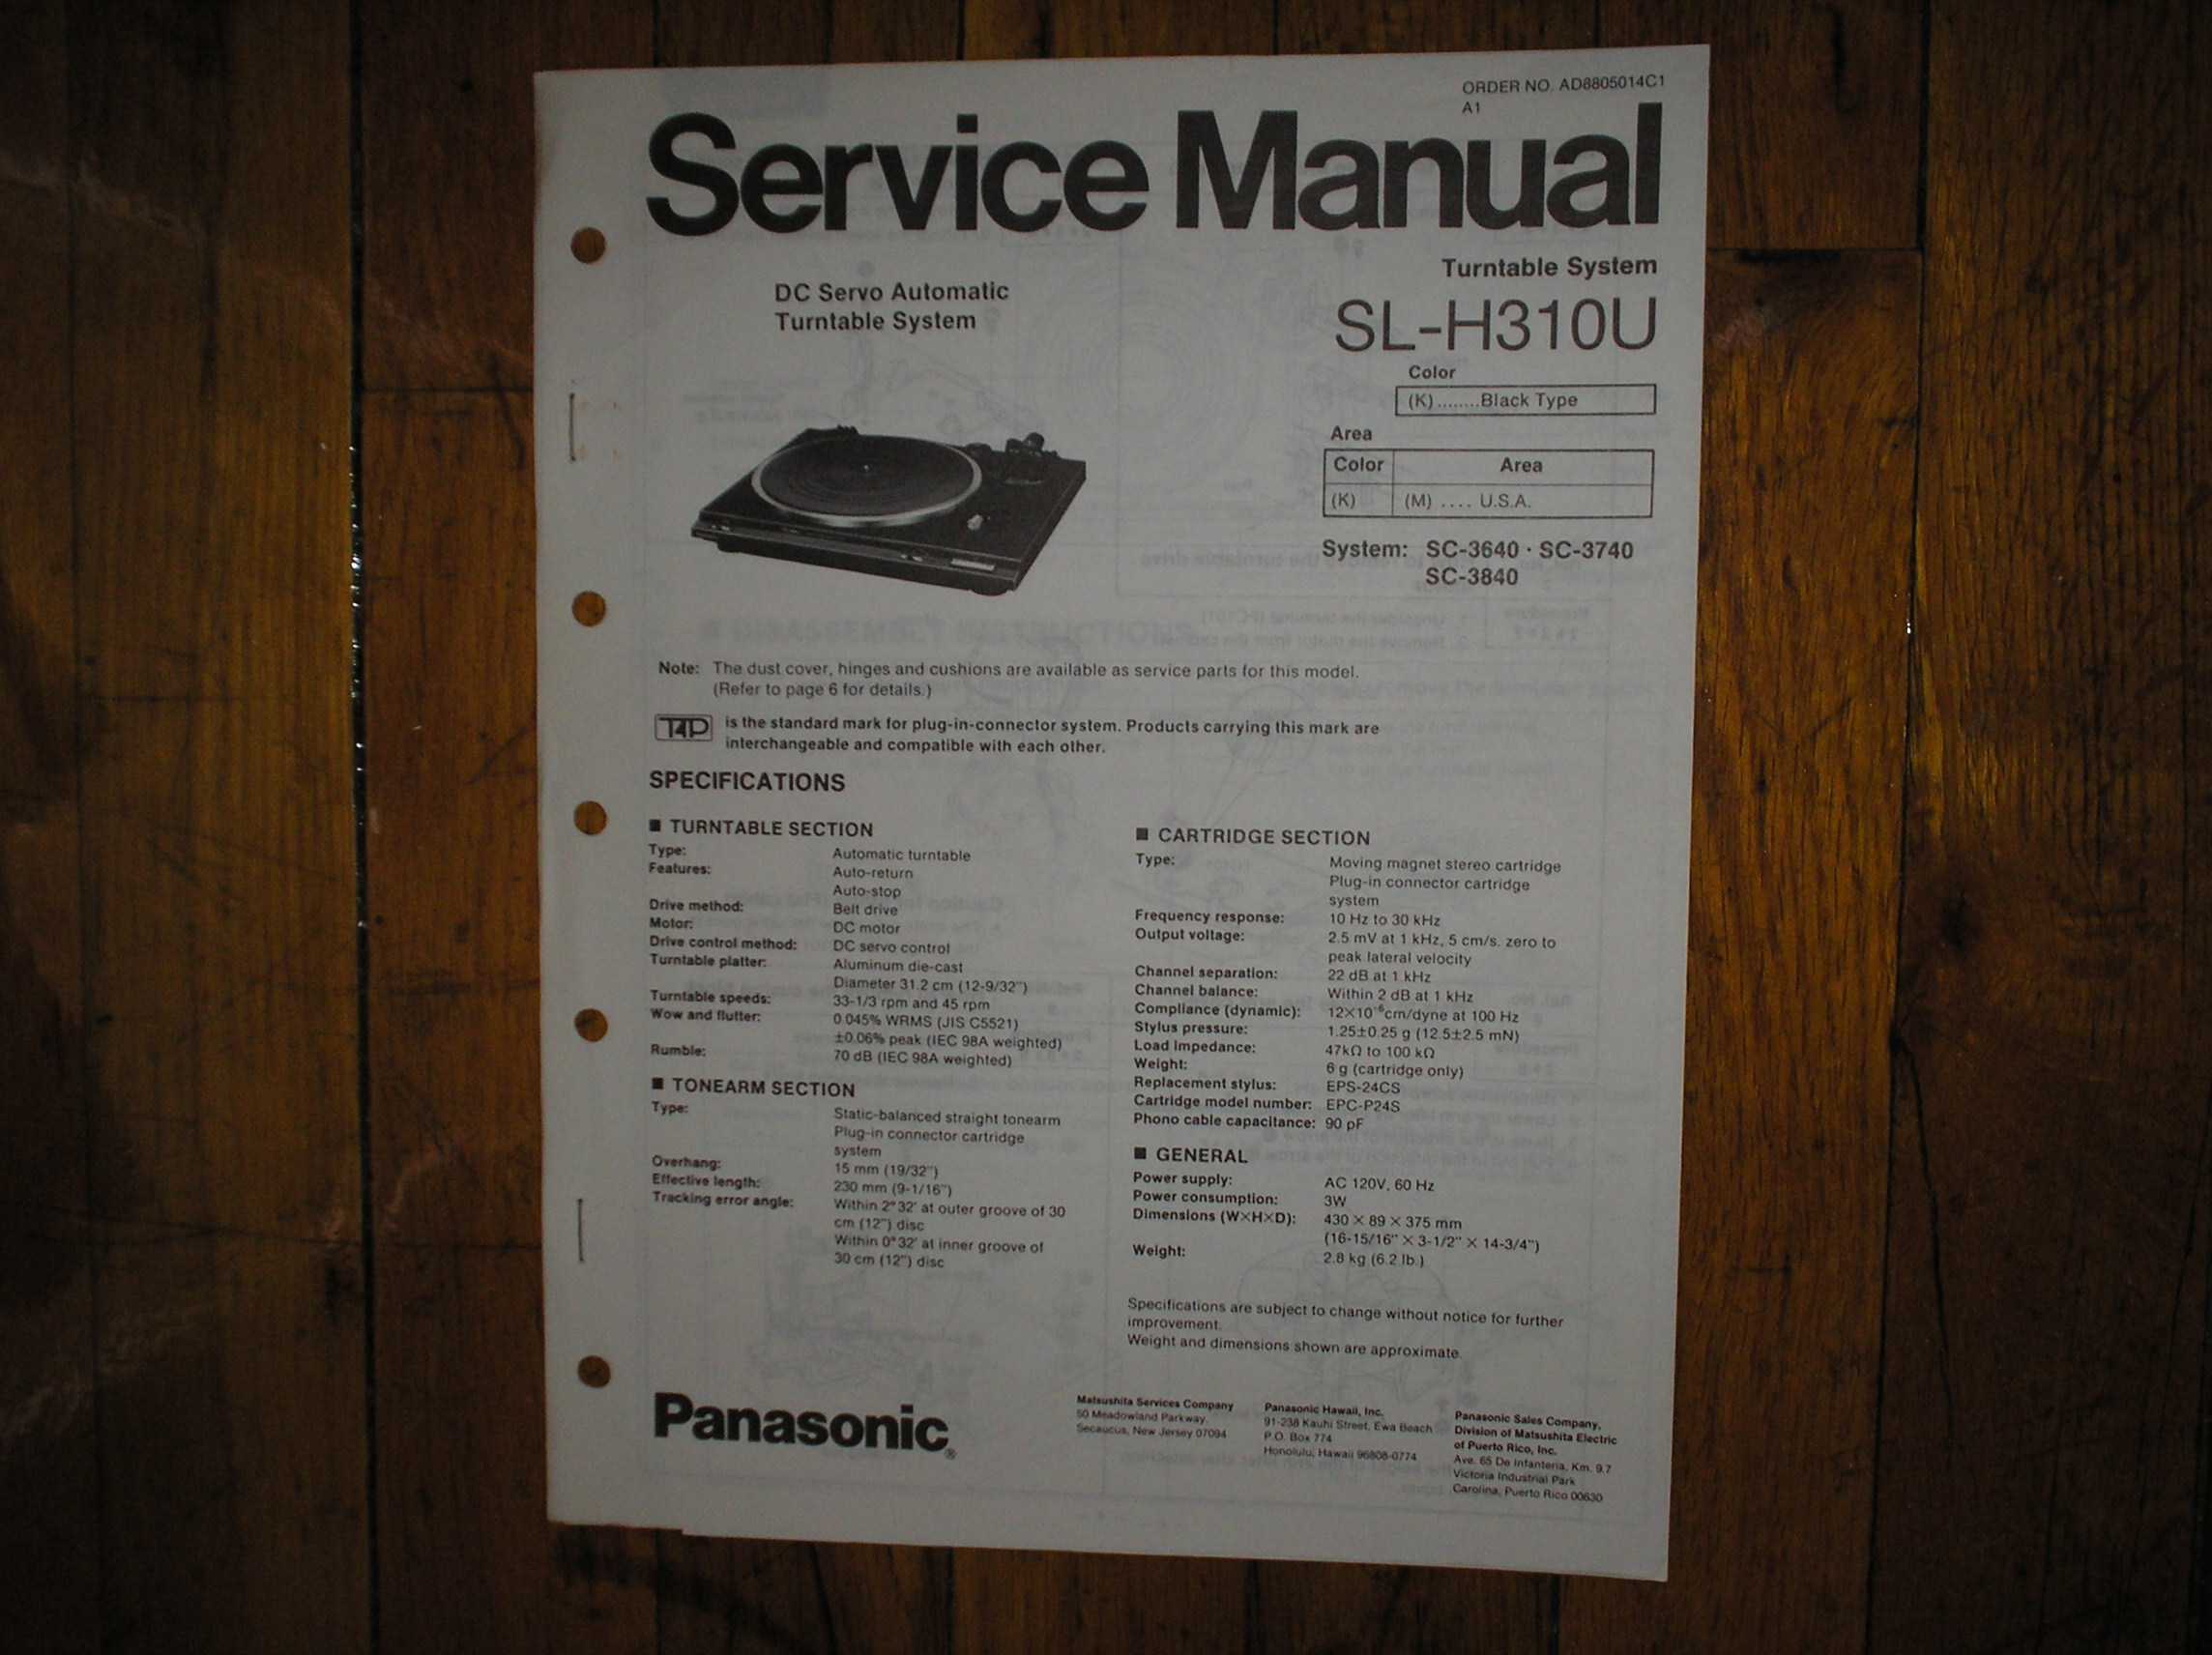 SL-H310U Turntable Service Manual